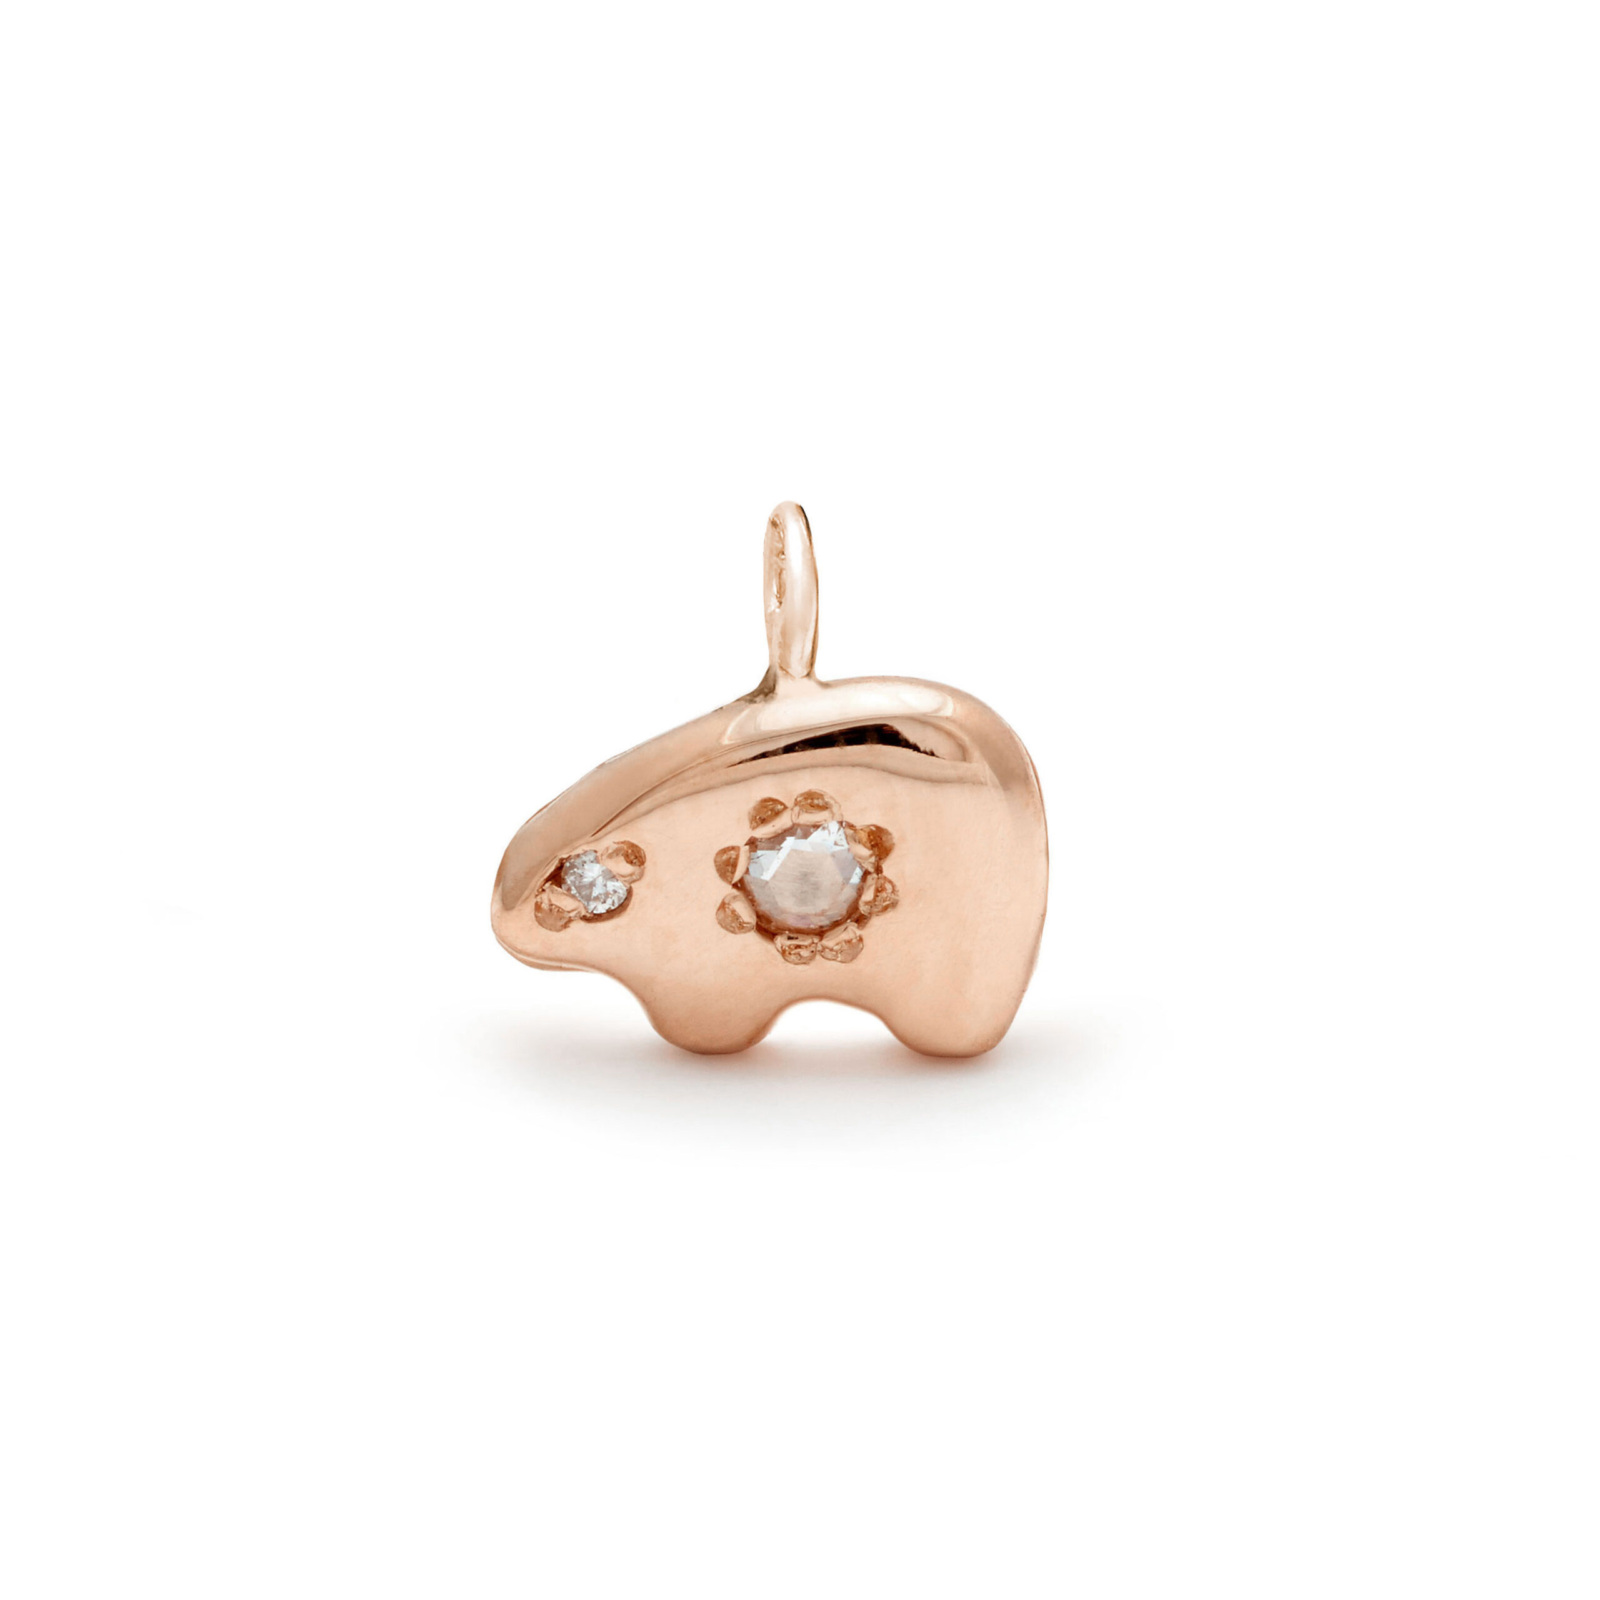 bear charm pendant jewelry - rosecut diamond - pink gold